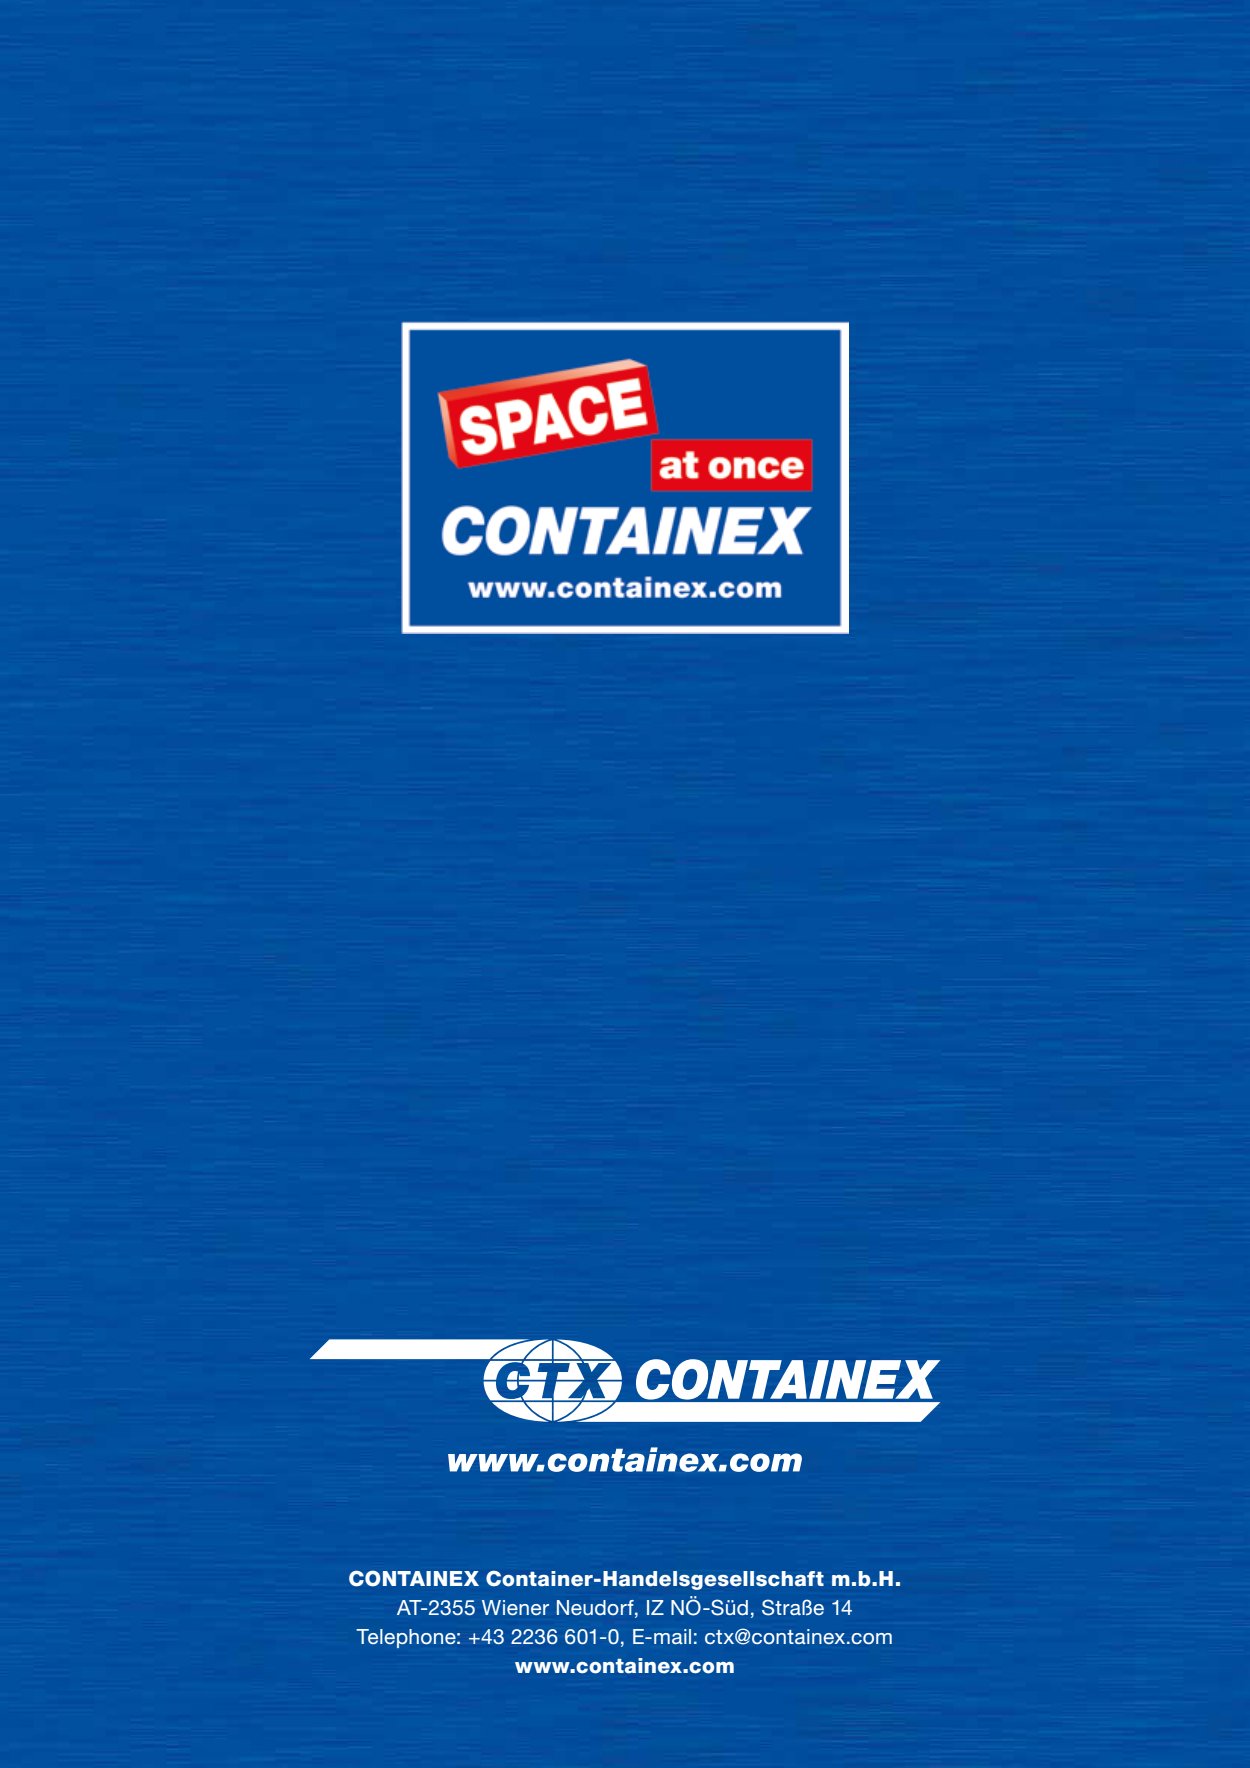 CONTAINEX Container-Handelsgesellschaft Wiener